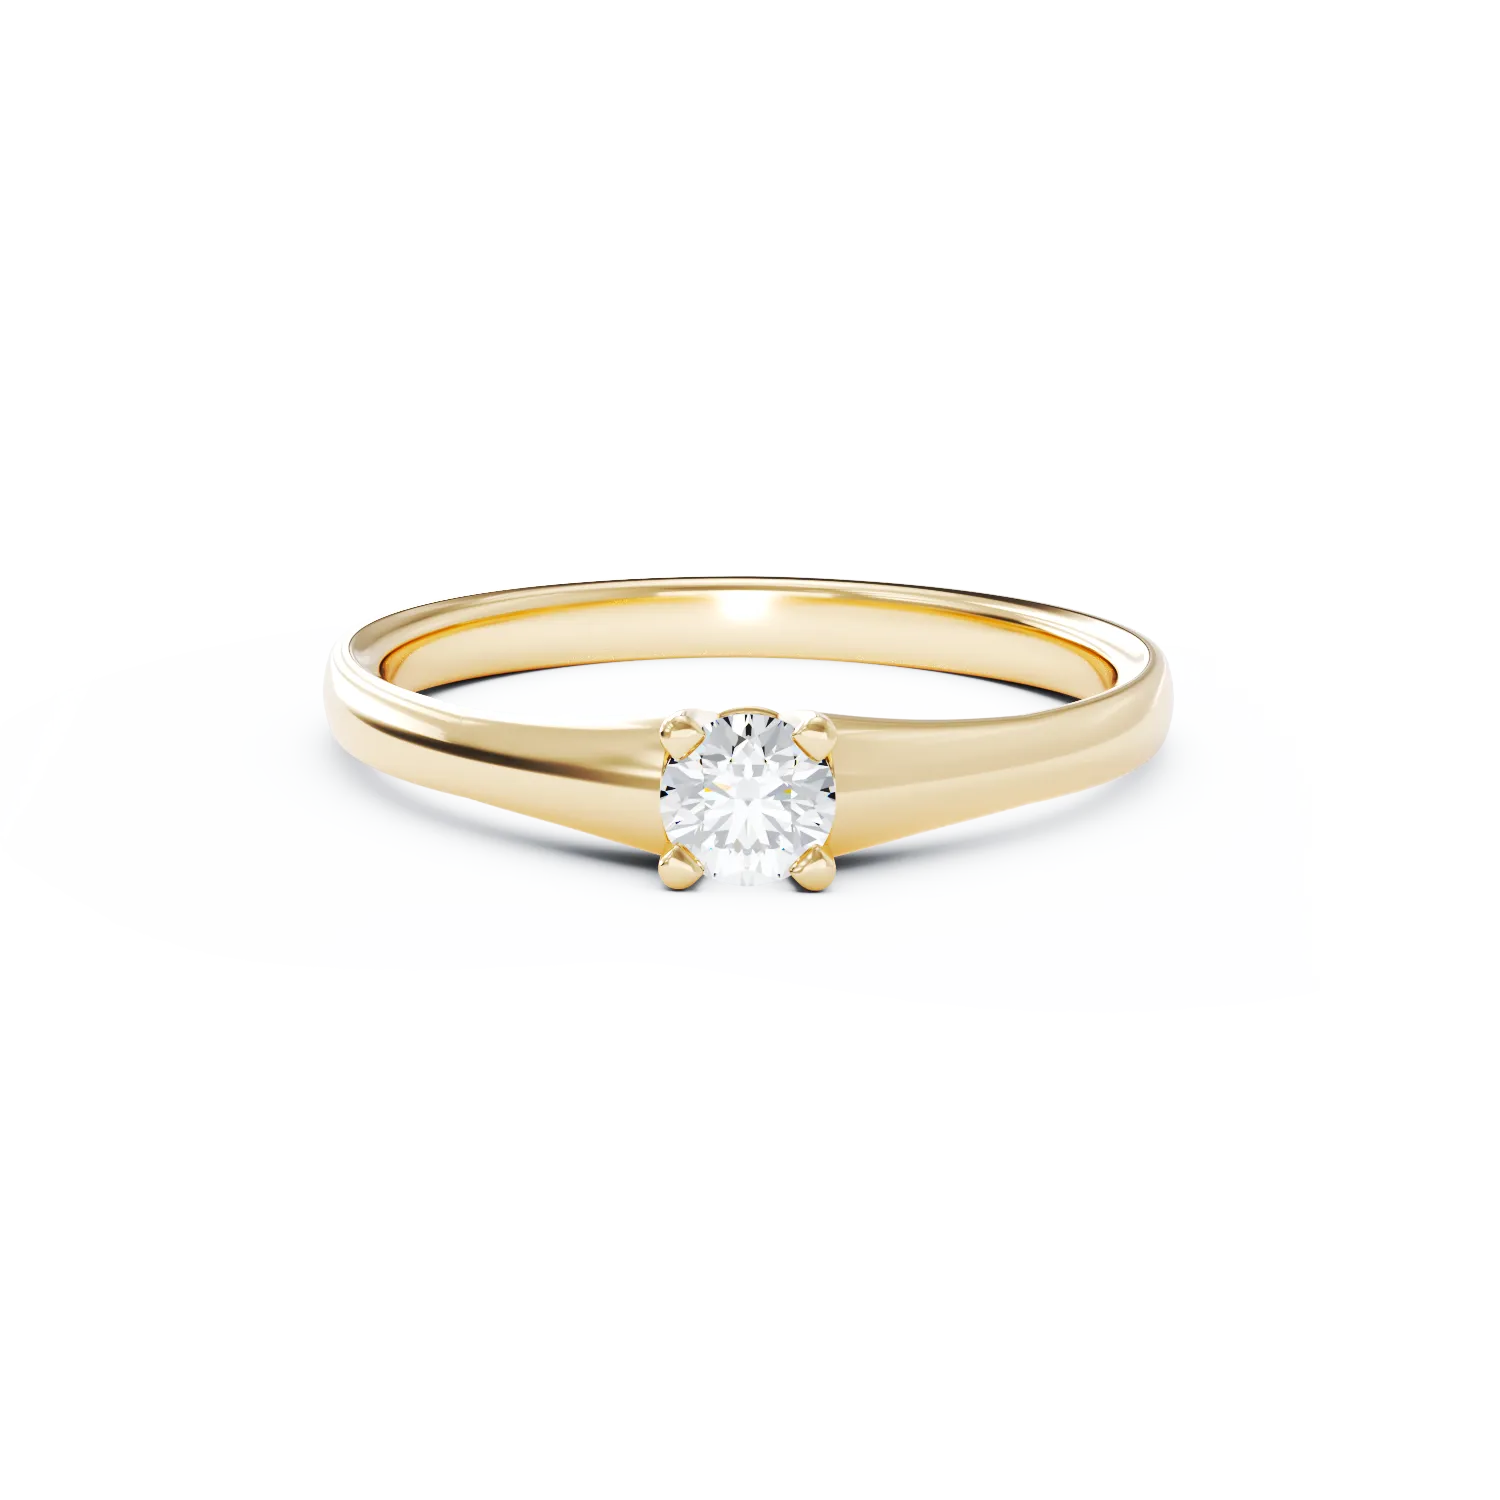 Inel de logodna din aur galben de 18K cu un diamant solitaire de 0.195ct